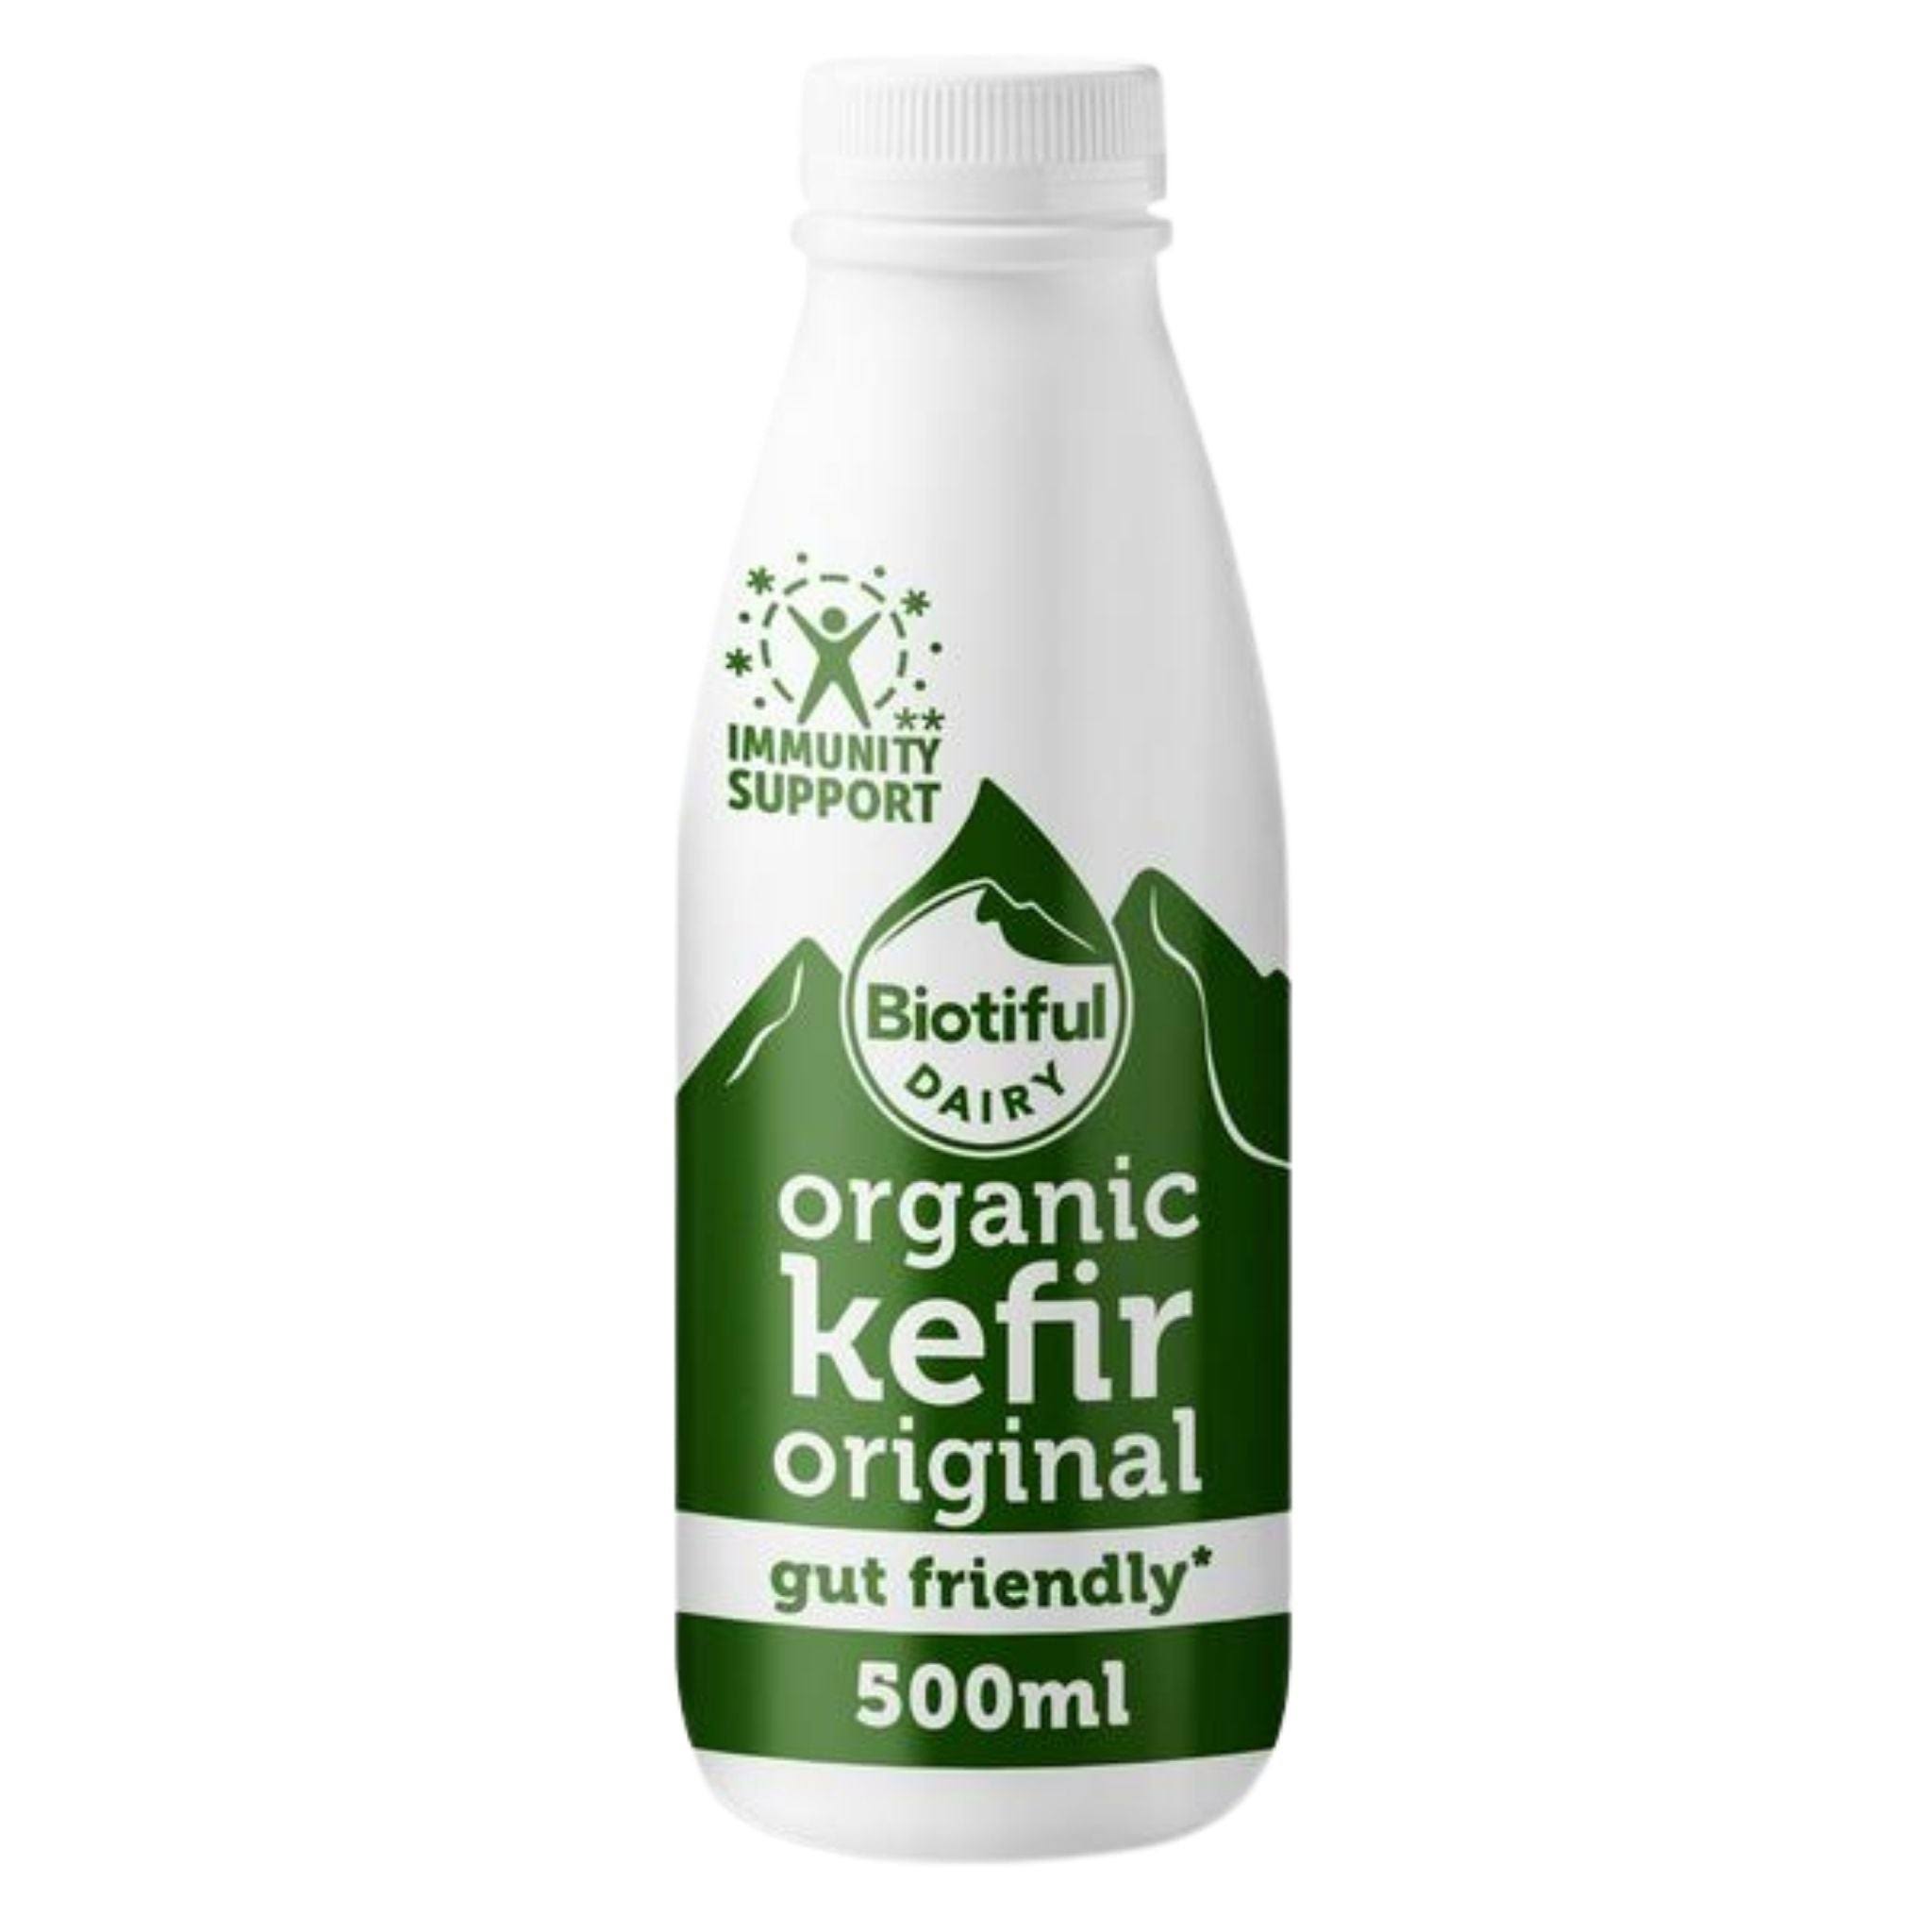 Kefir Biotiful Dairy Organic Cultured Milk Drink - 500ml